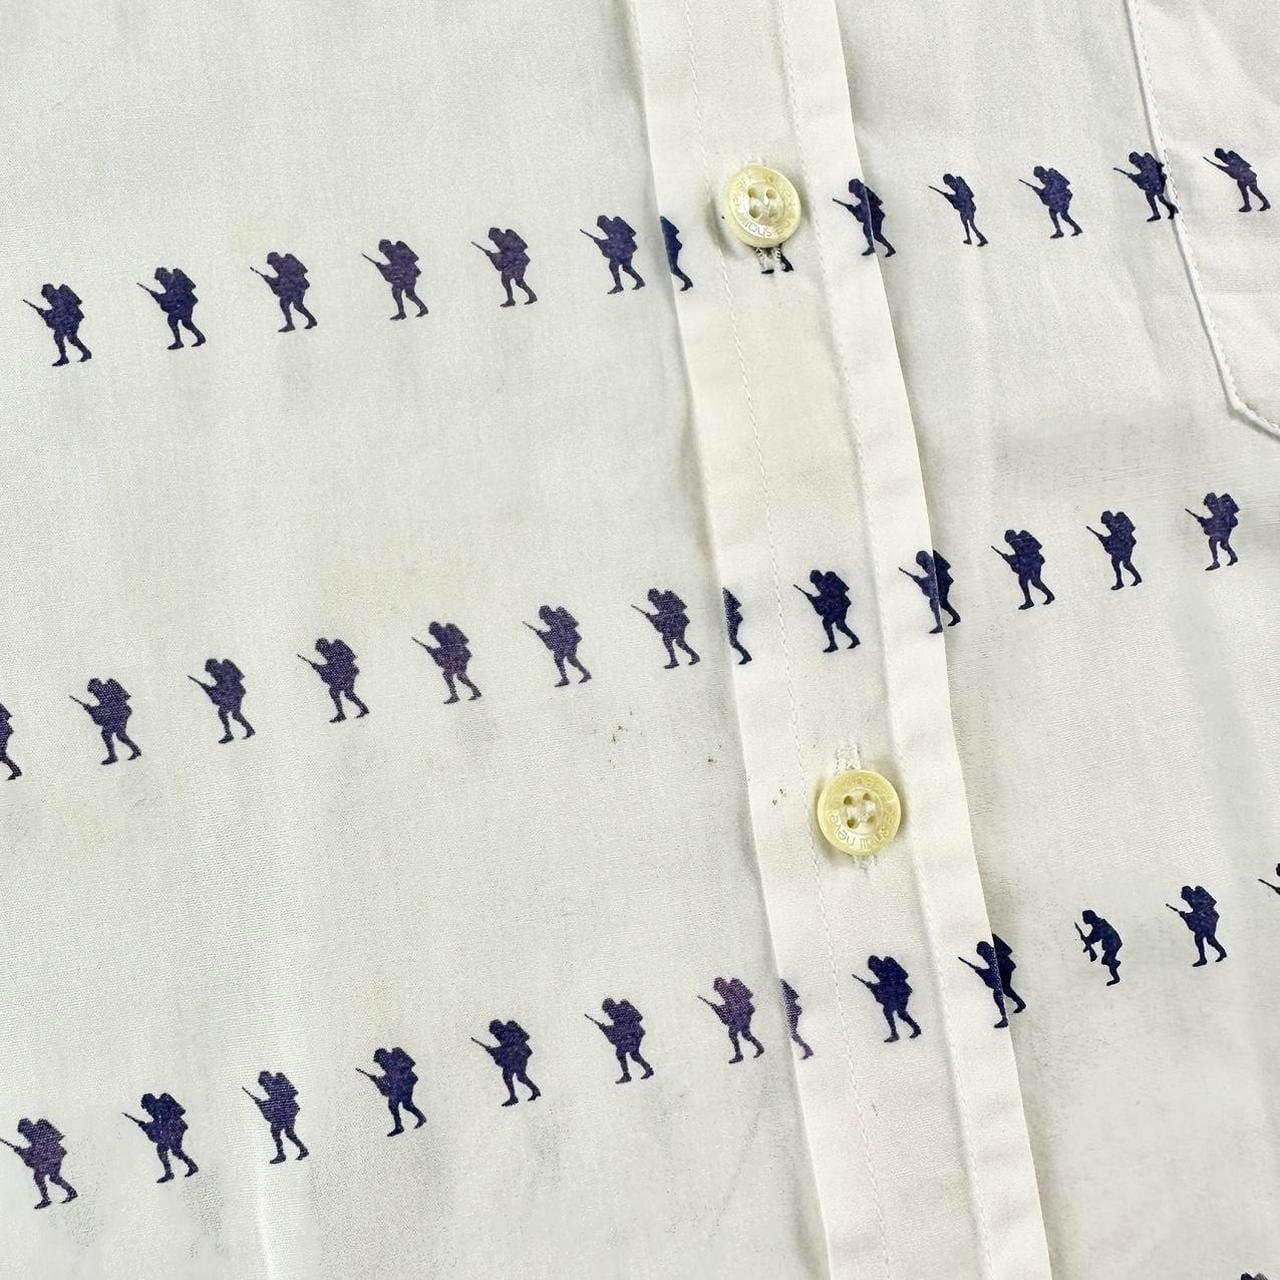 Bape monogram button shirt size M - Known Source